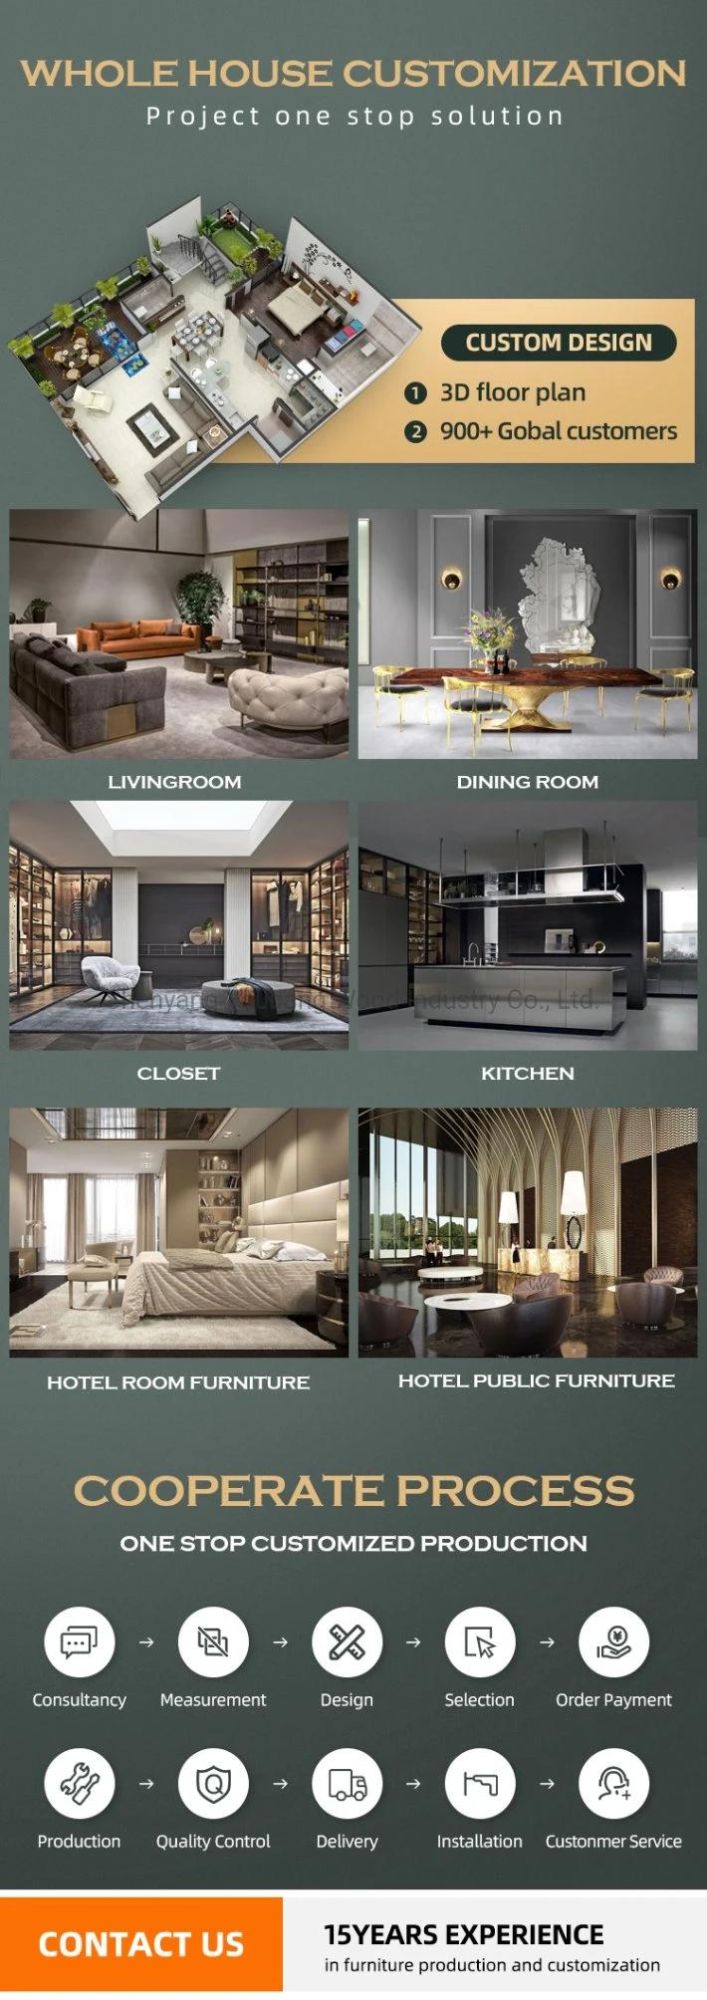 2021 Design Customized Latest Headboard Hotel Bedroom Wooden Furniture Set